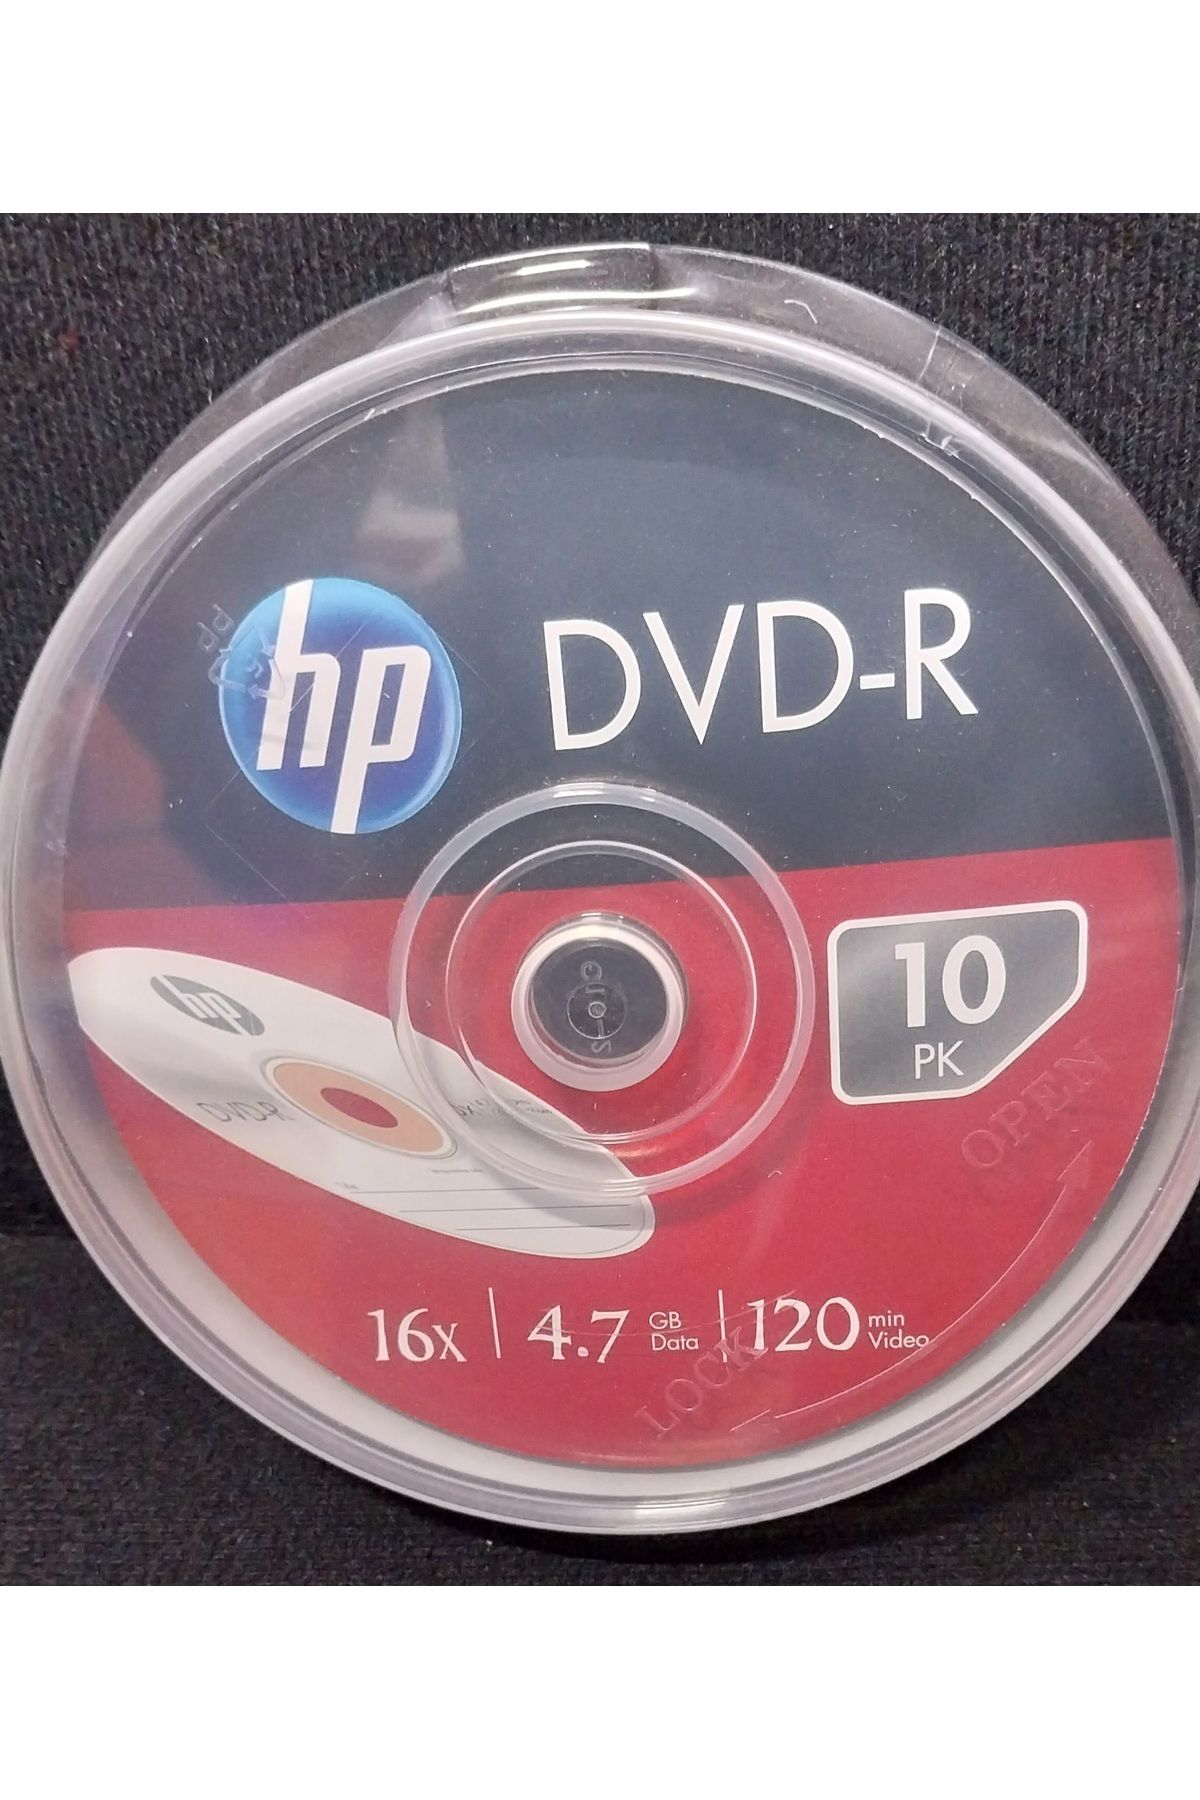 Raks Hp Dvd-r 4.7 Gb 120 Min Video 10 Pk